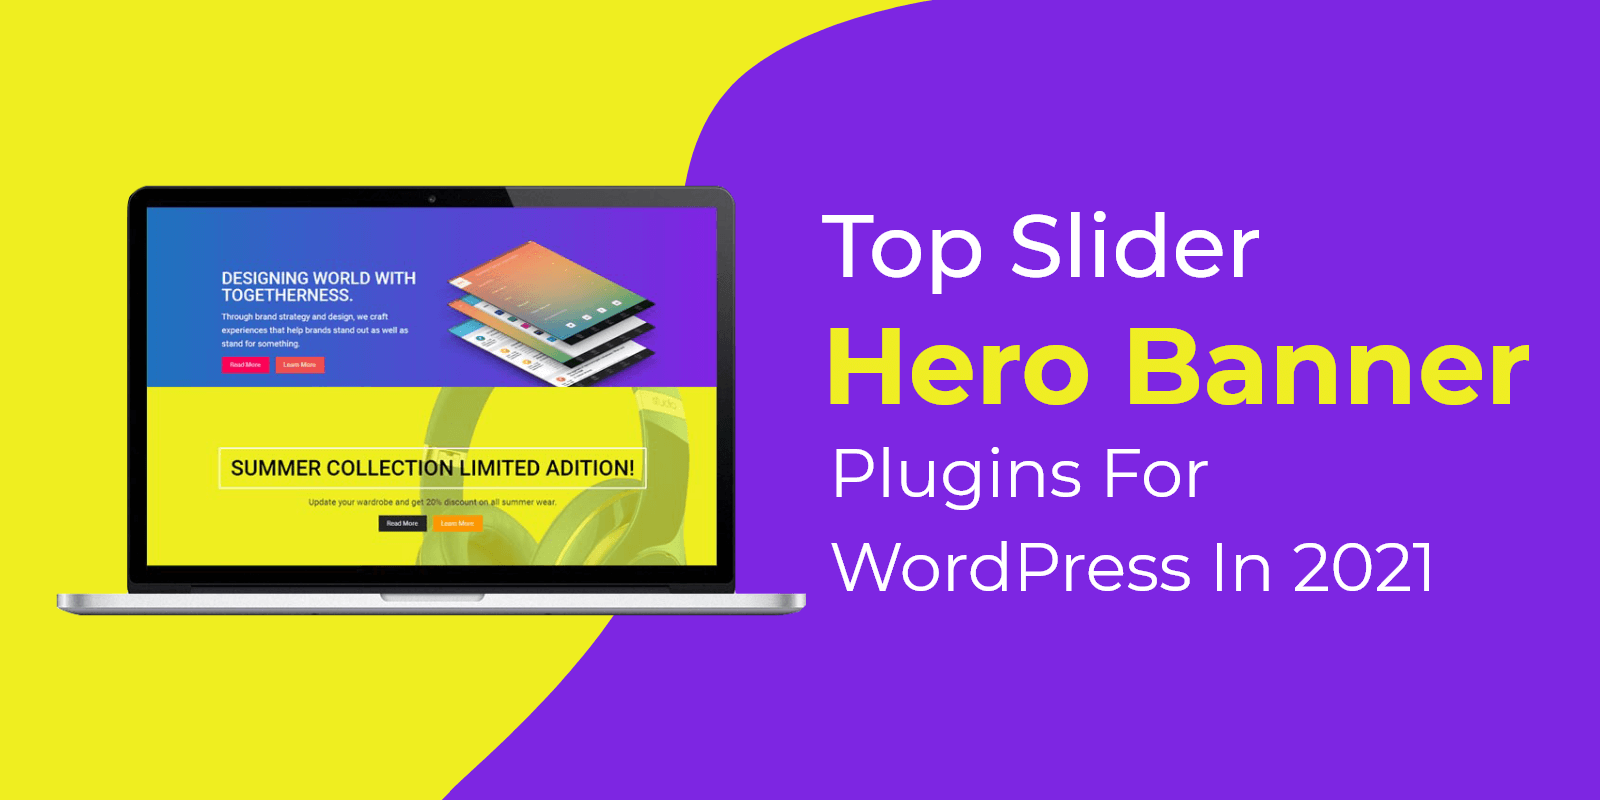 Top Slider Hero Banner Plugins for WordPress in 2021